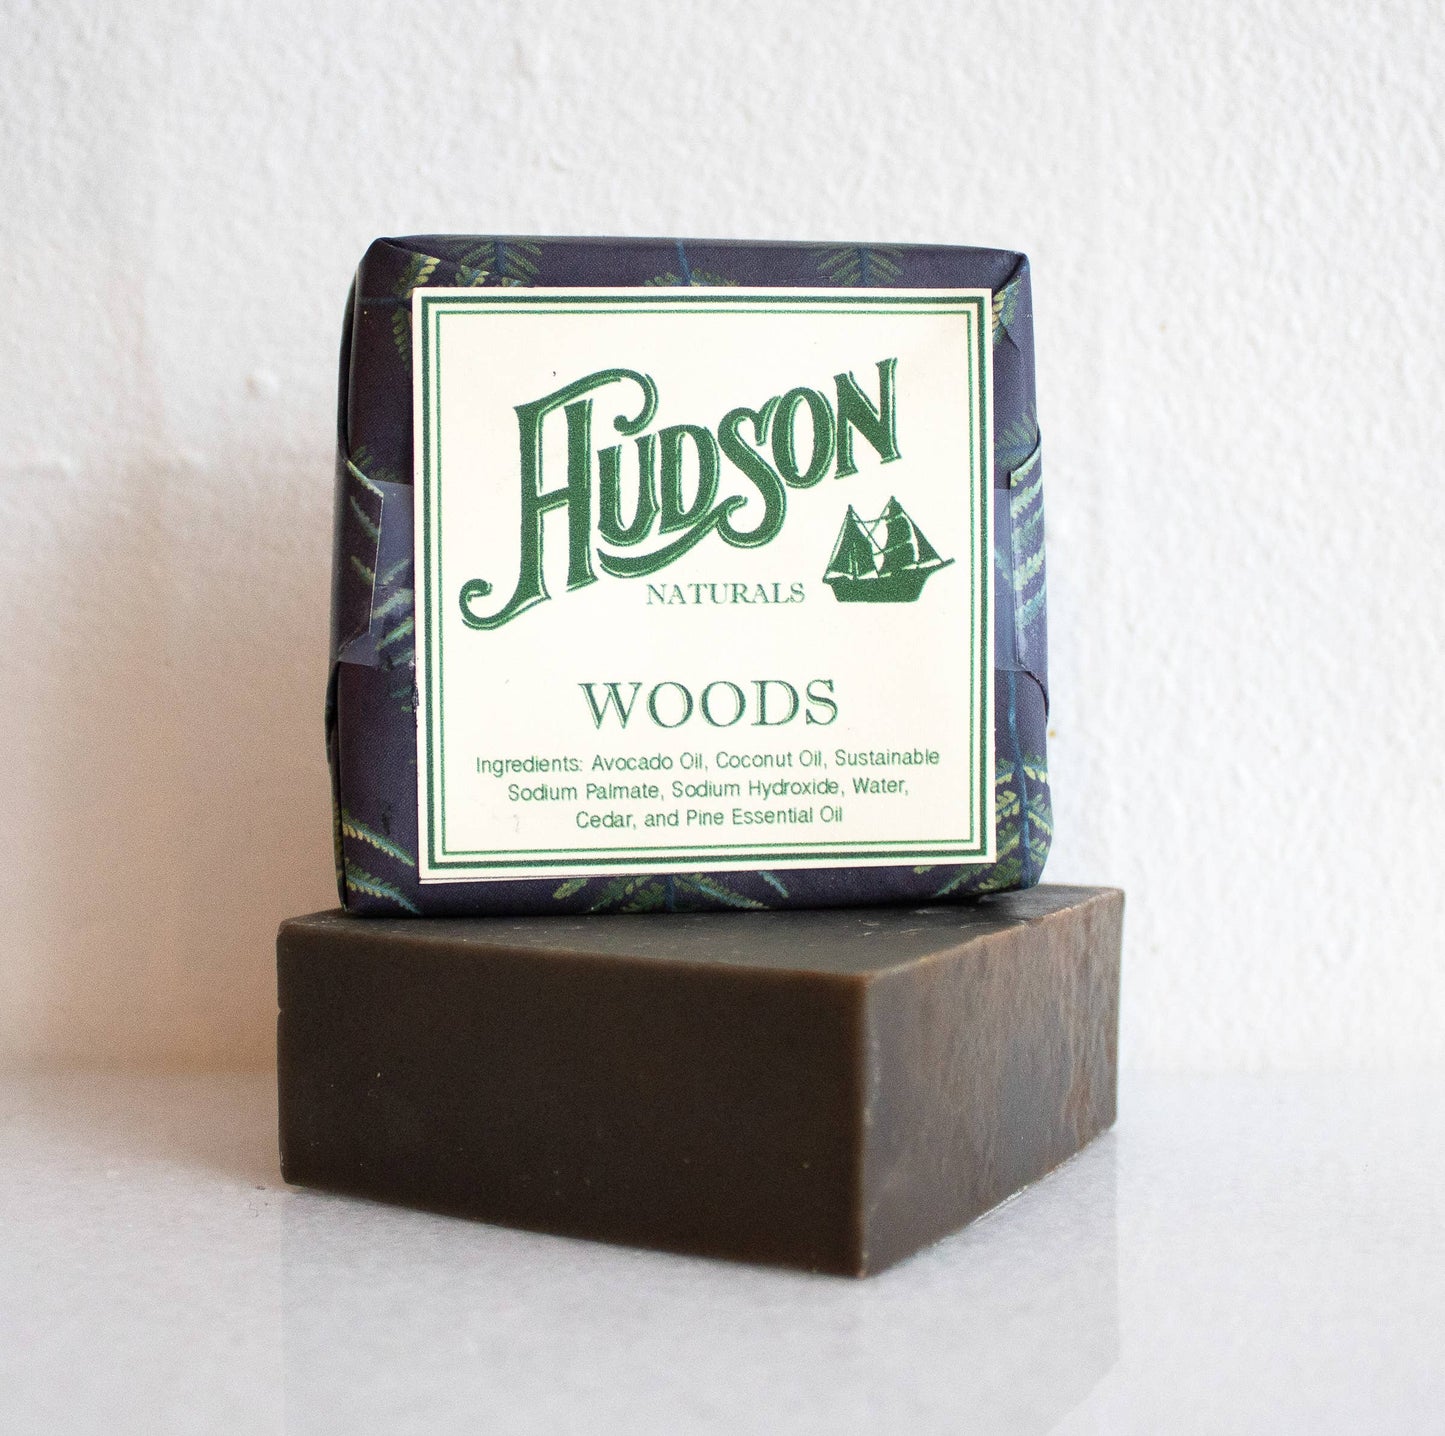 Hudson Naturals Woods Soap